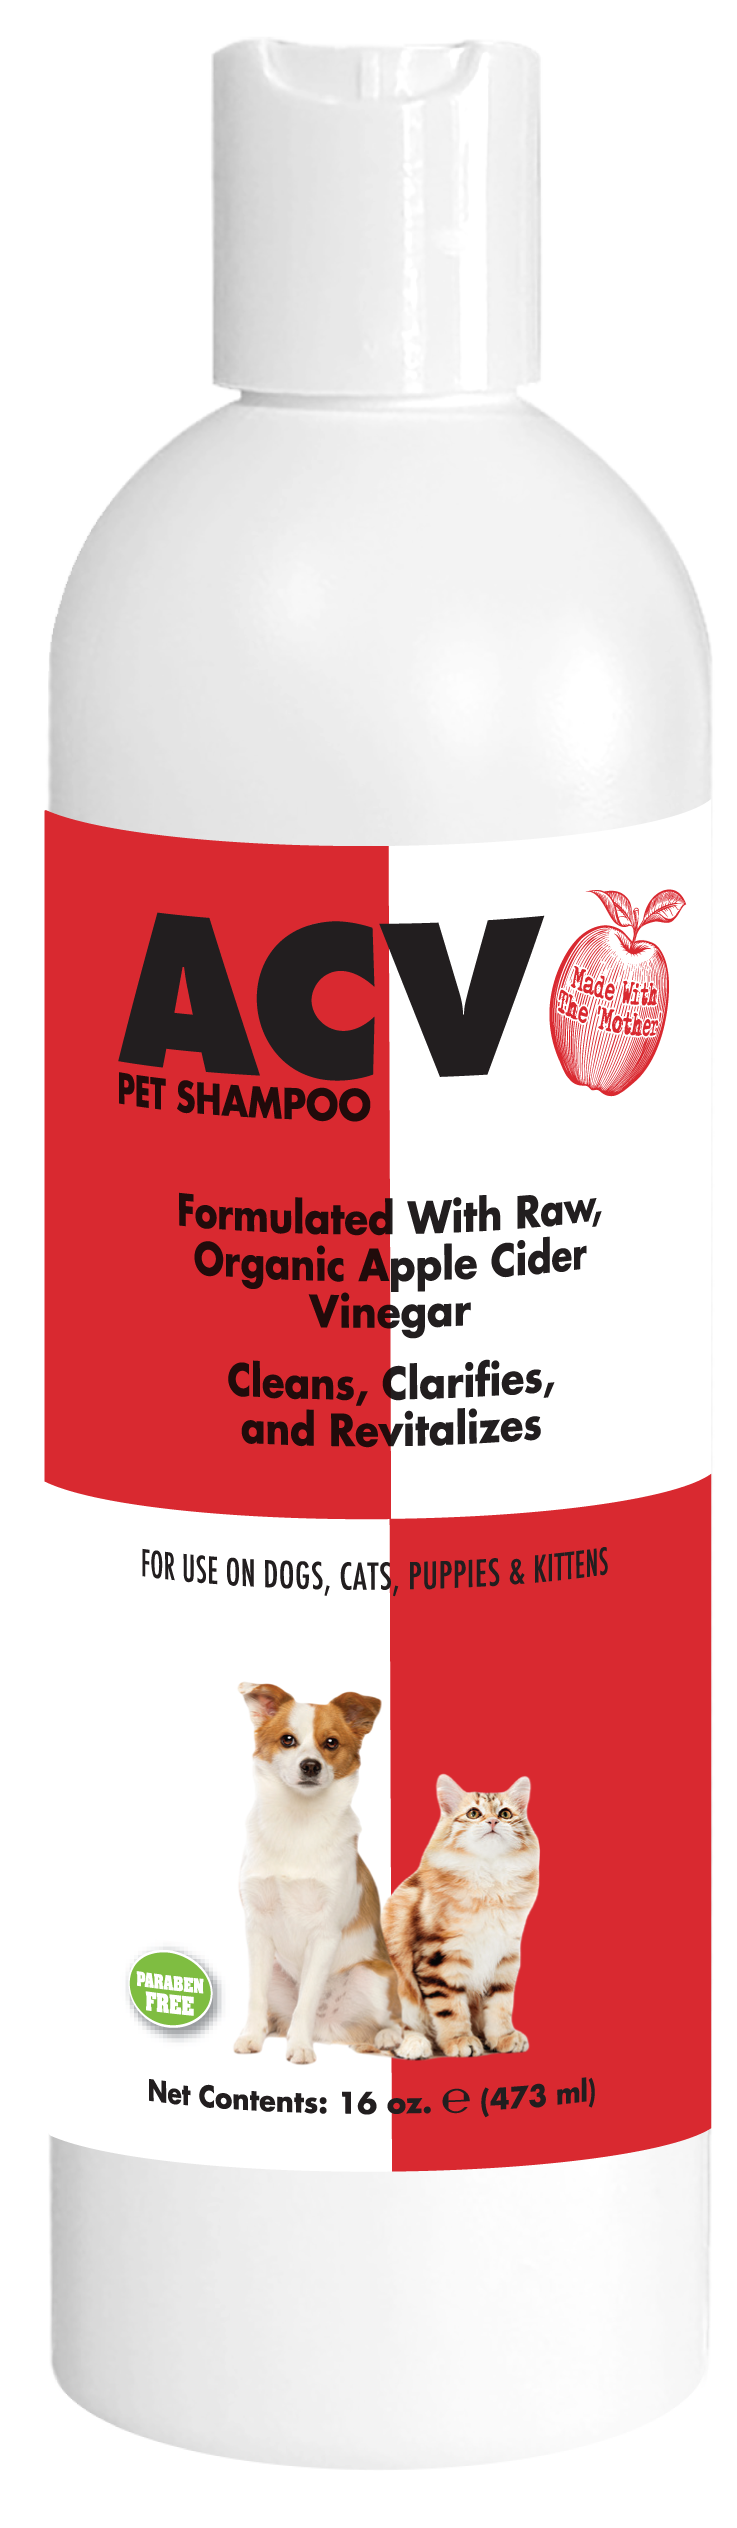 ACV Pet Shampoo (Apple Cider Vinegar)